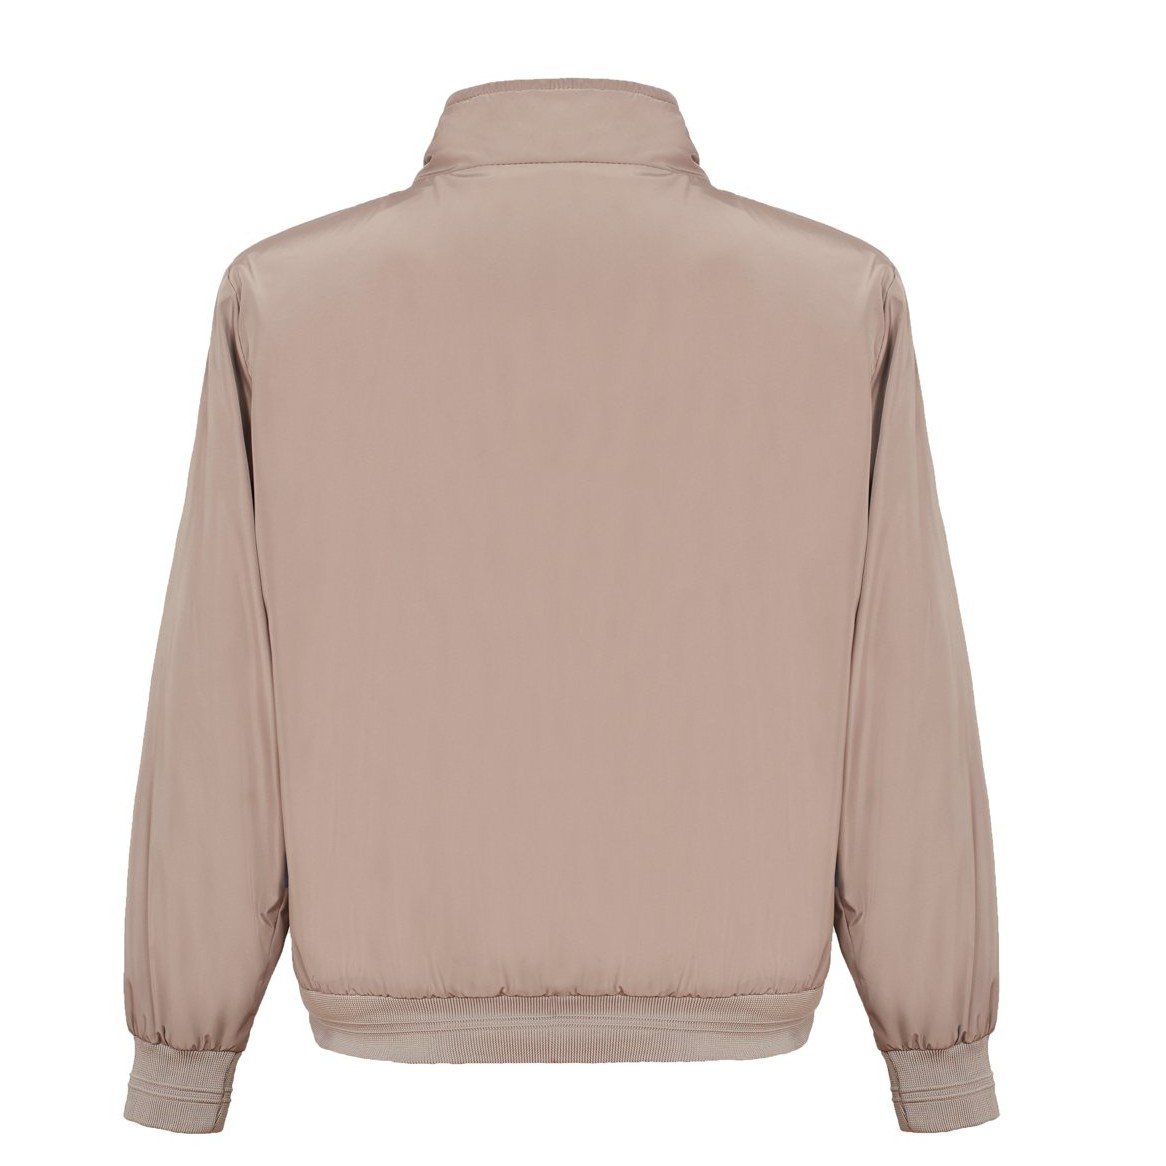 Unisex Fine Polyester Jacket- Delicias Style- Cream Color